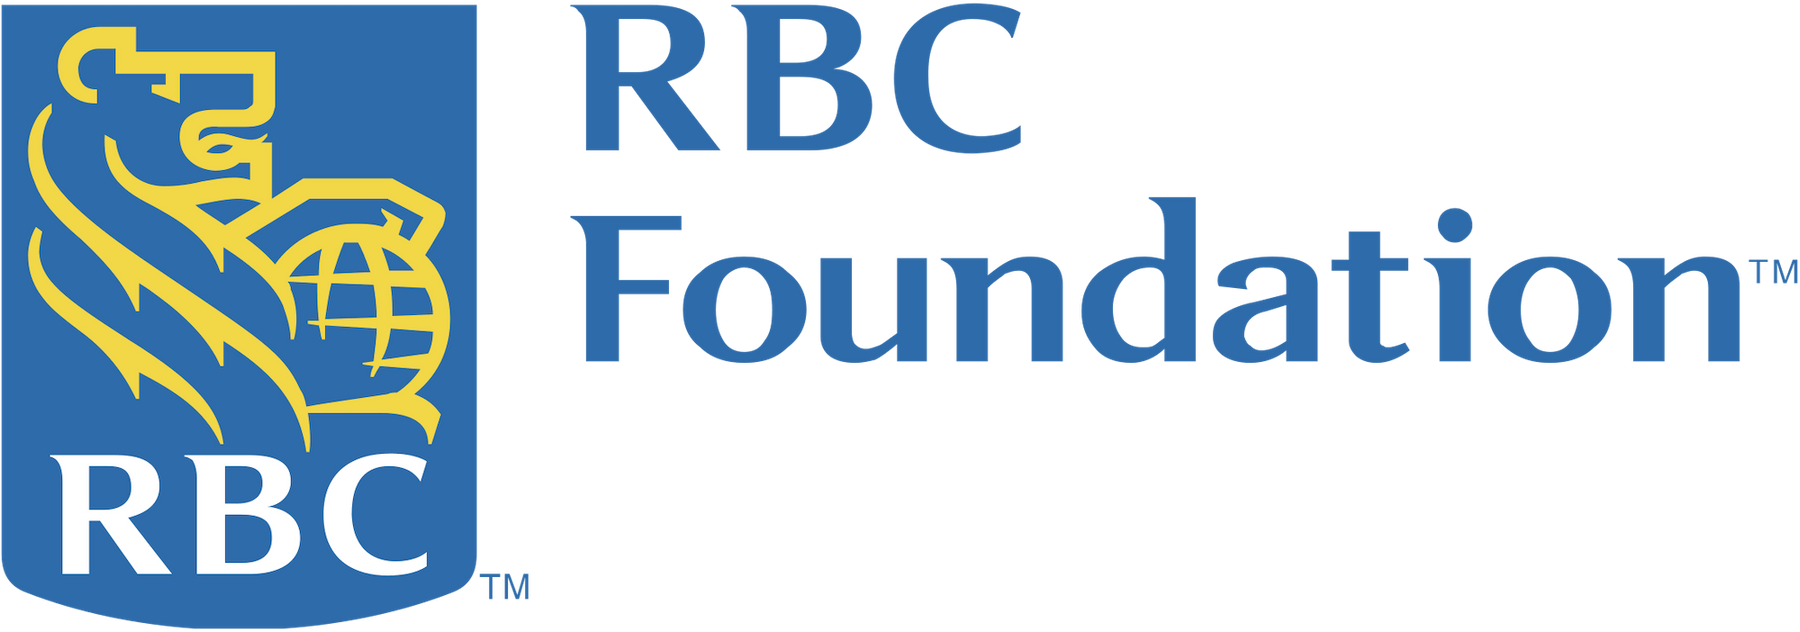 RBC Foundation logo on a transparent background.